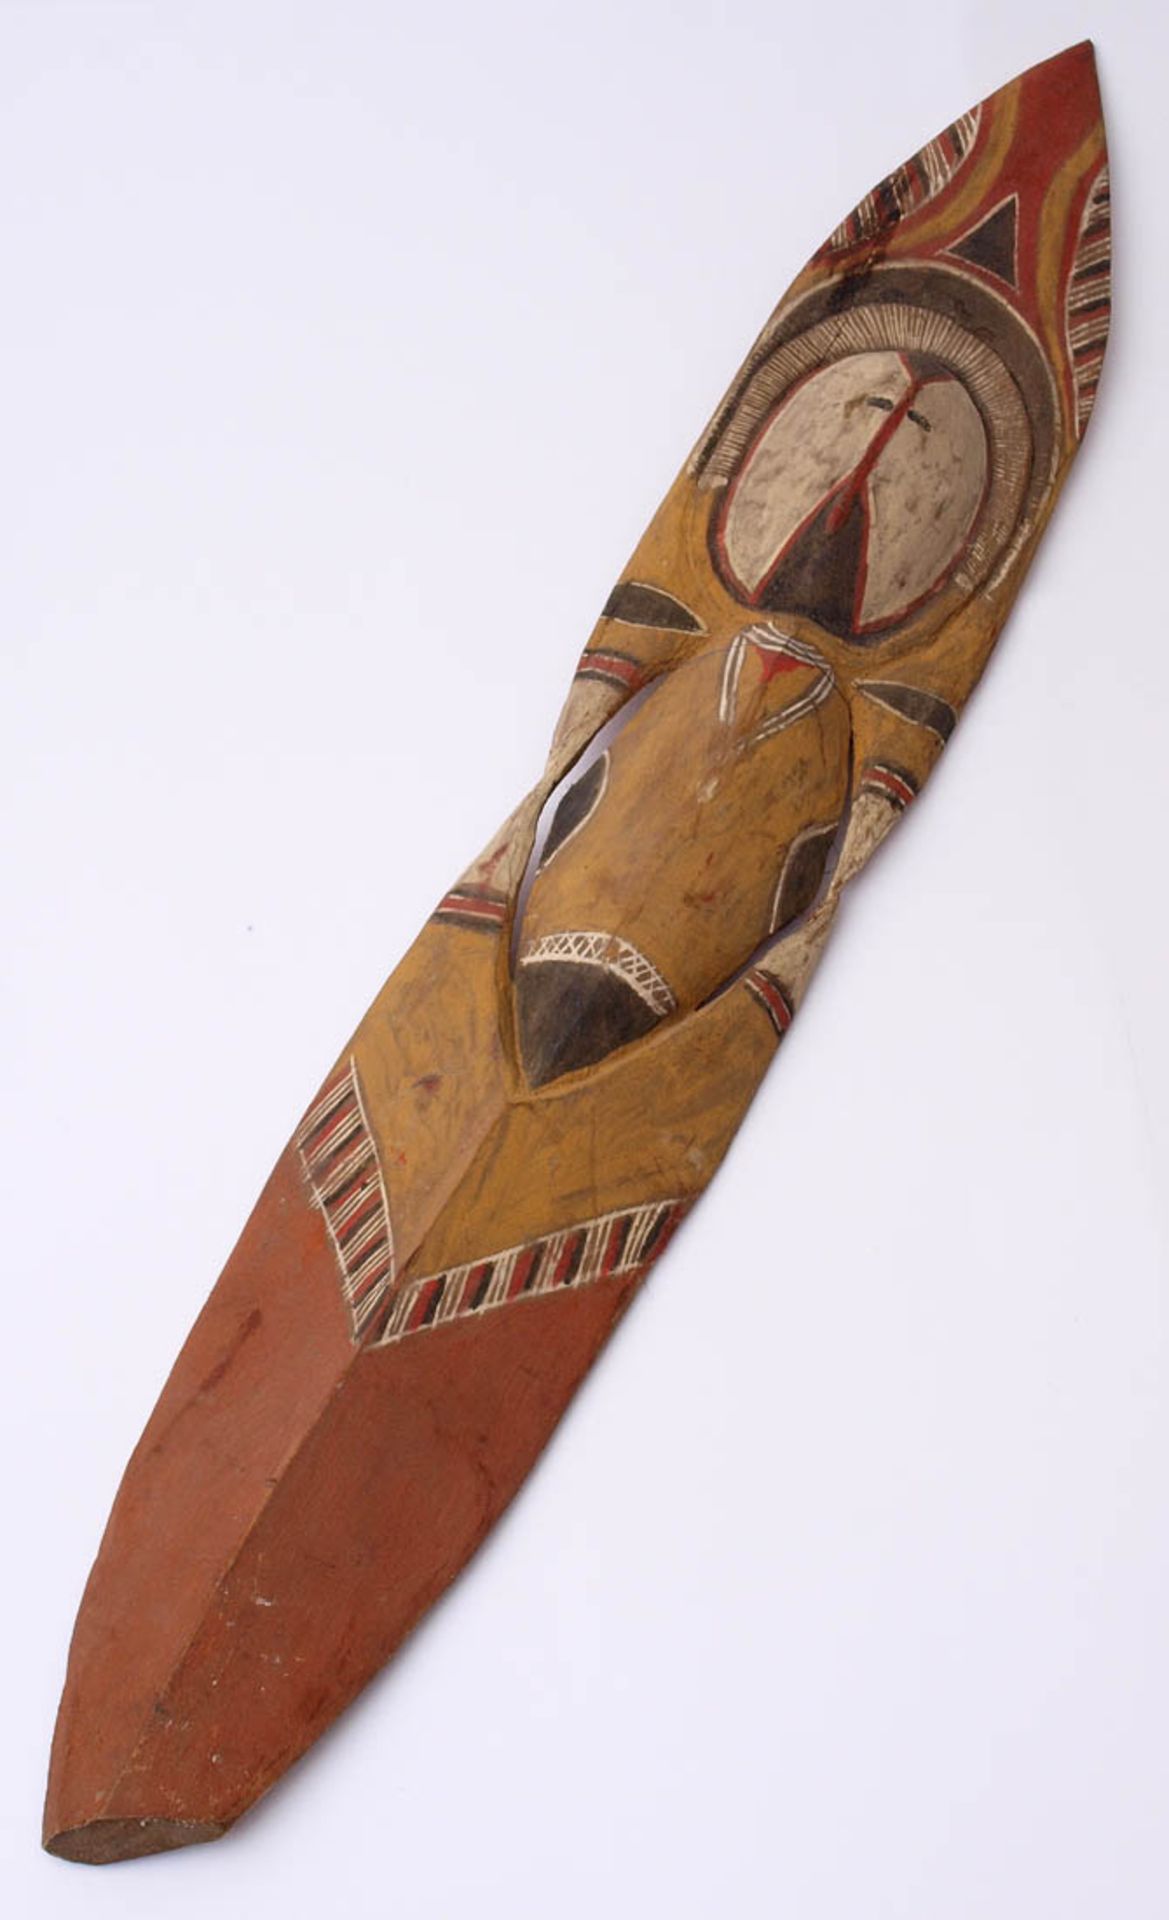 Yams-Ahnenfigur, Neuguinea Wosera-Region. Holz, farbig bemalt. L.100cm.    Aufrufpreis: 60 EUR